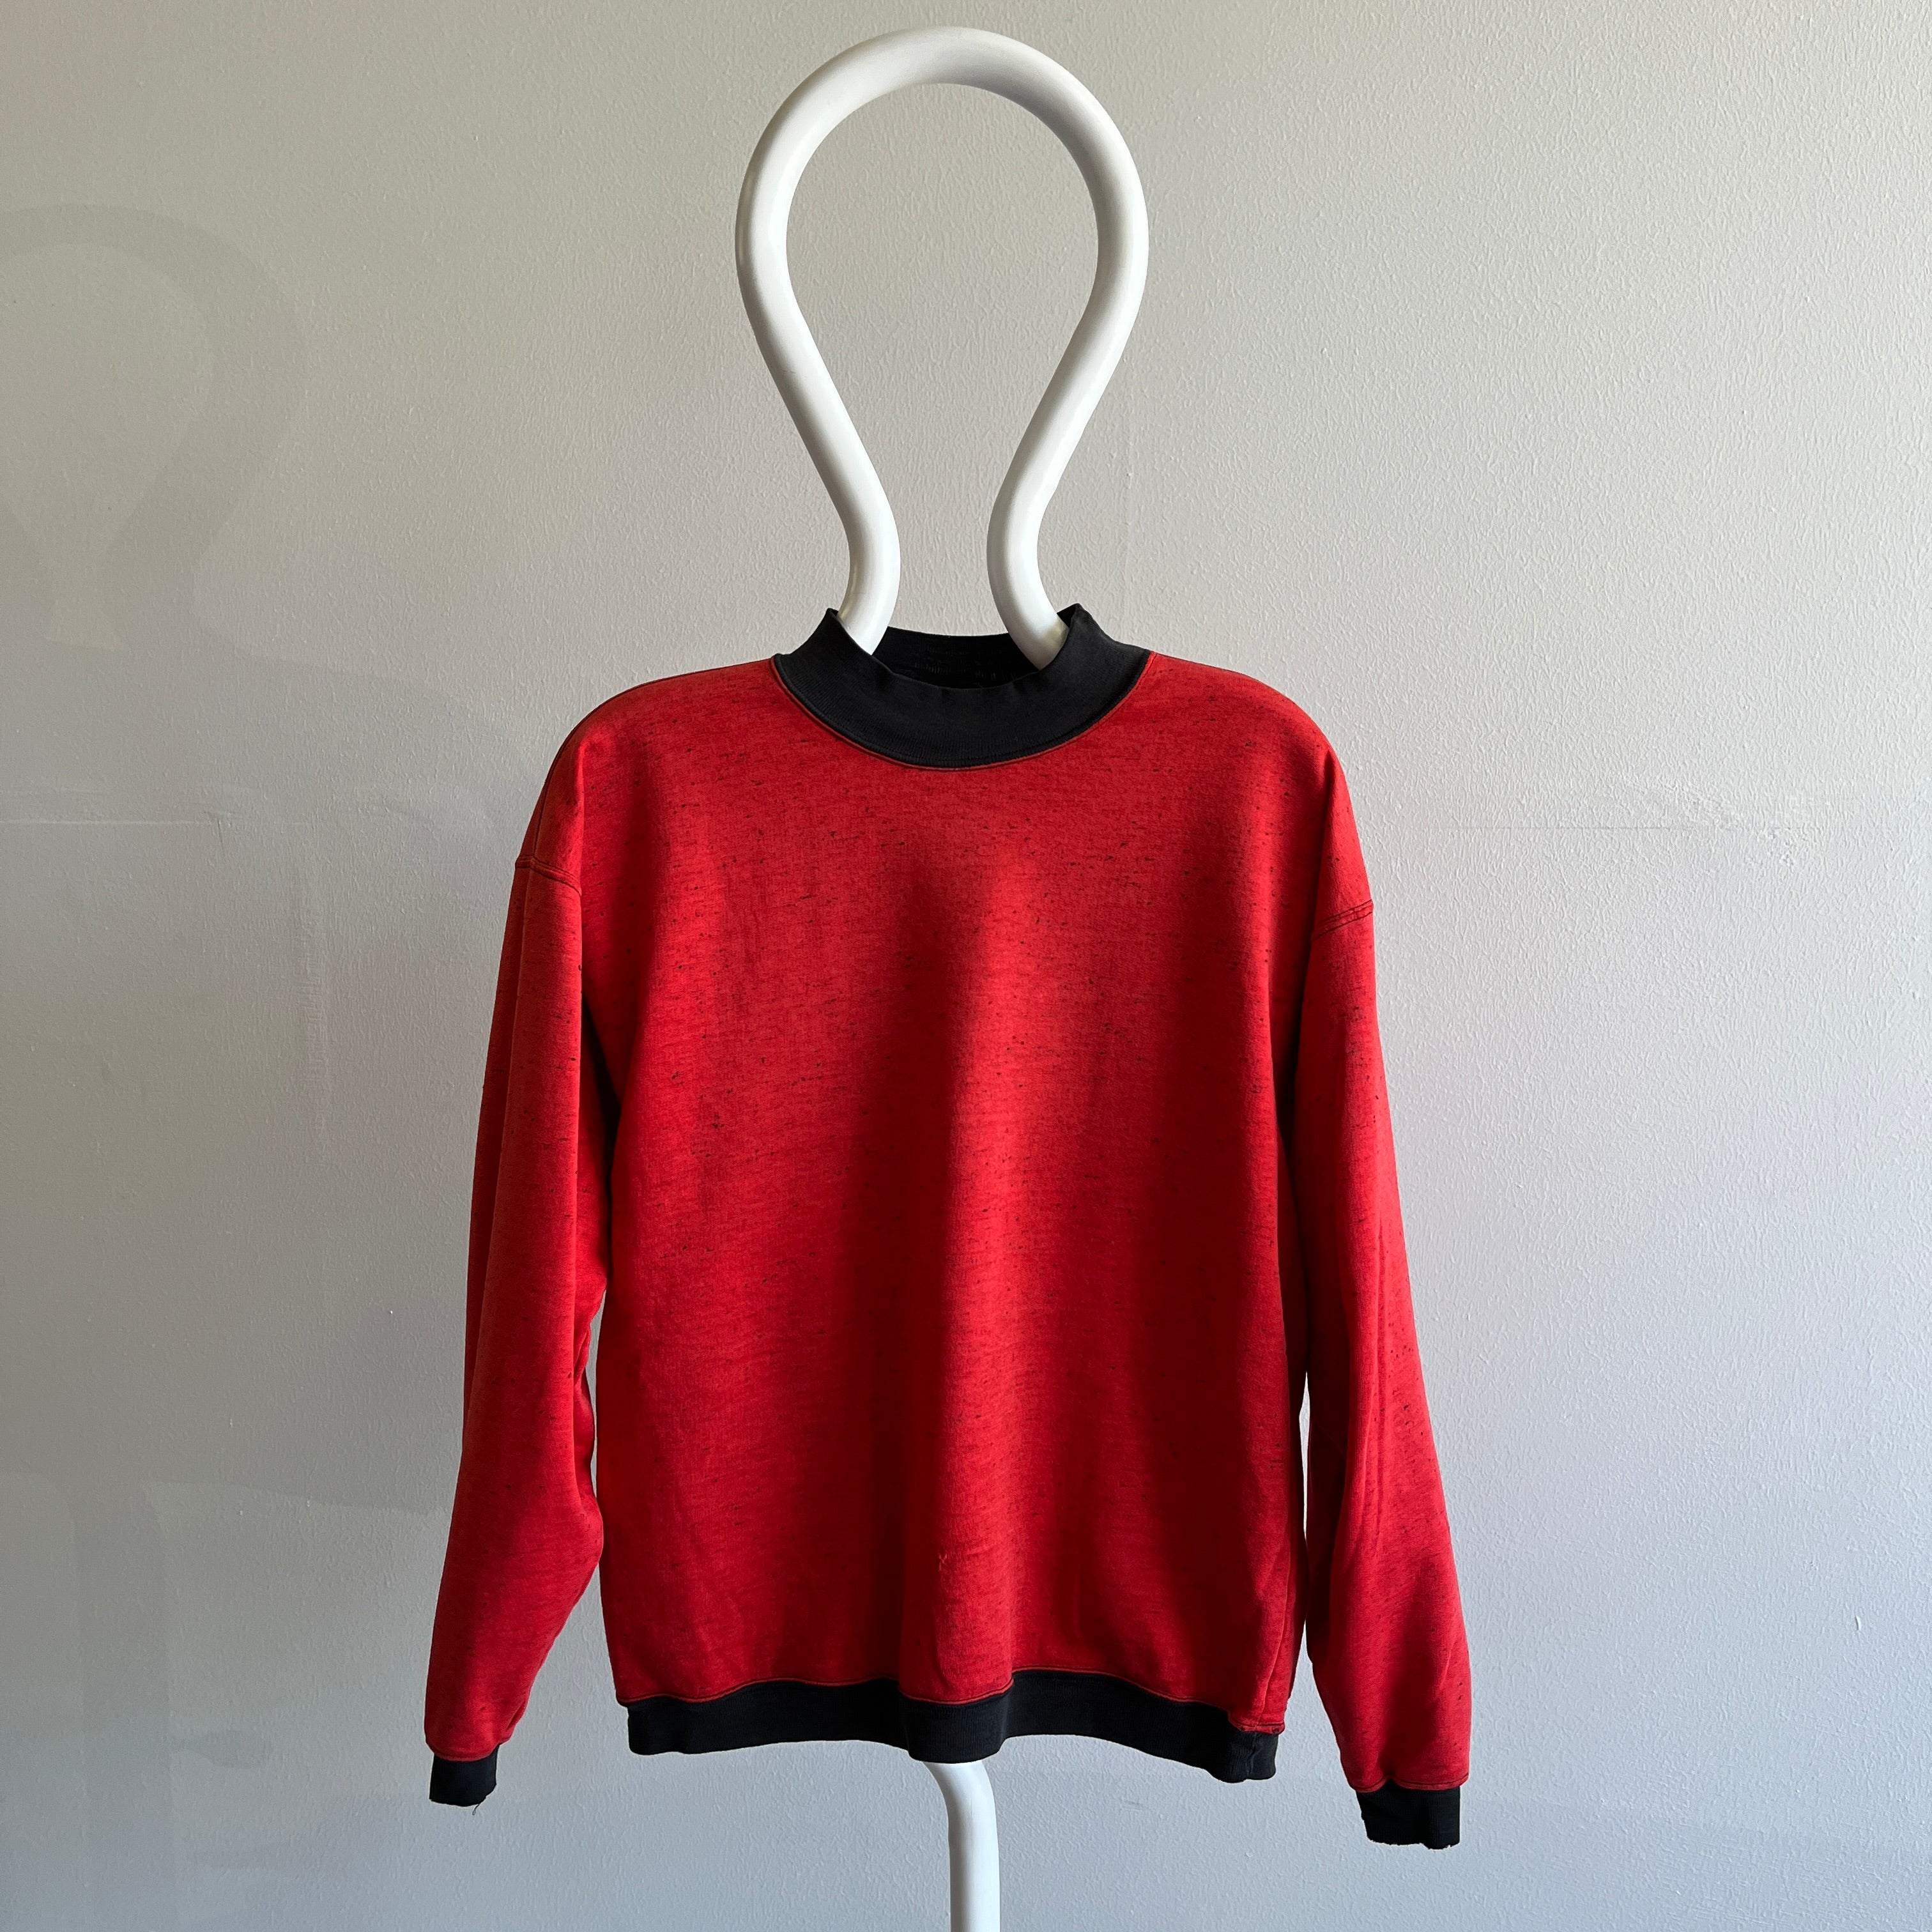 GG Heather Red Sweatshirt with Brown/Black Contrast Trim